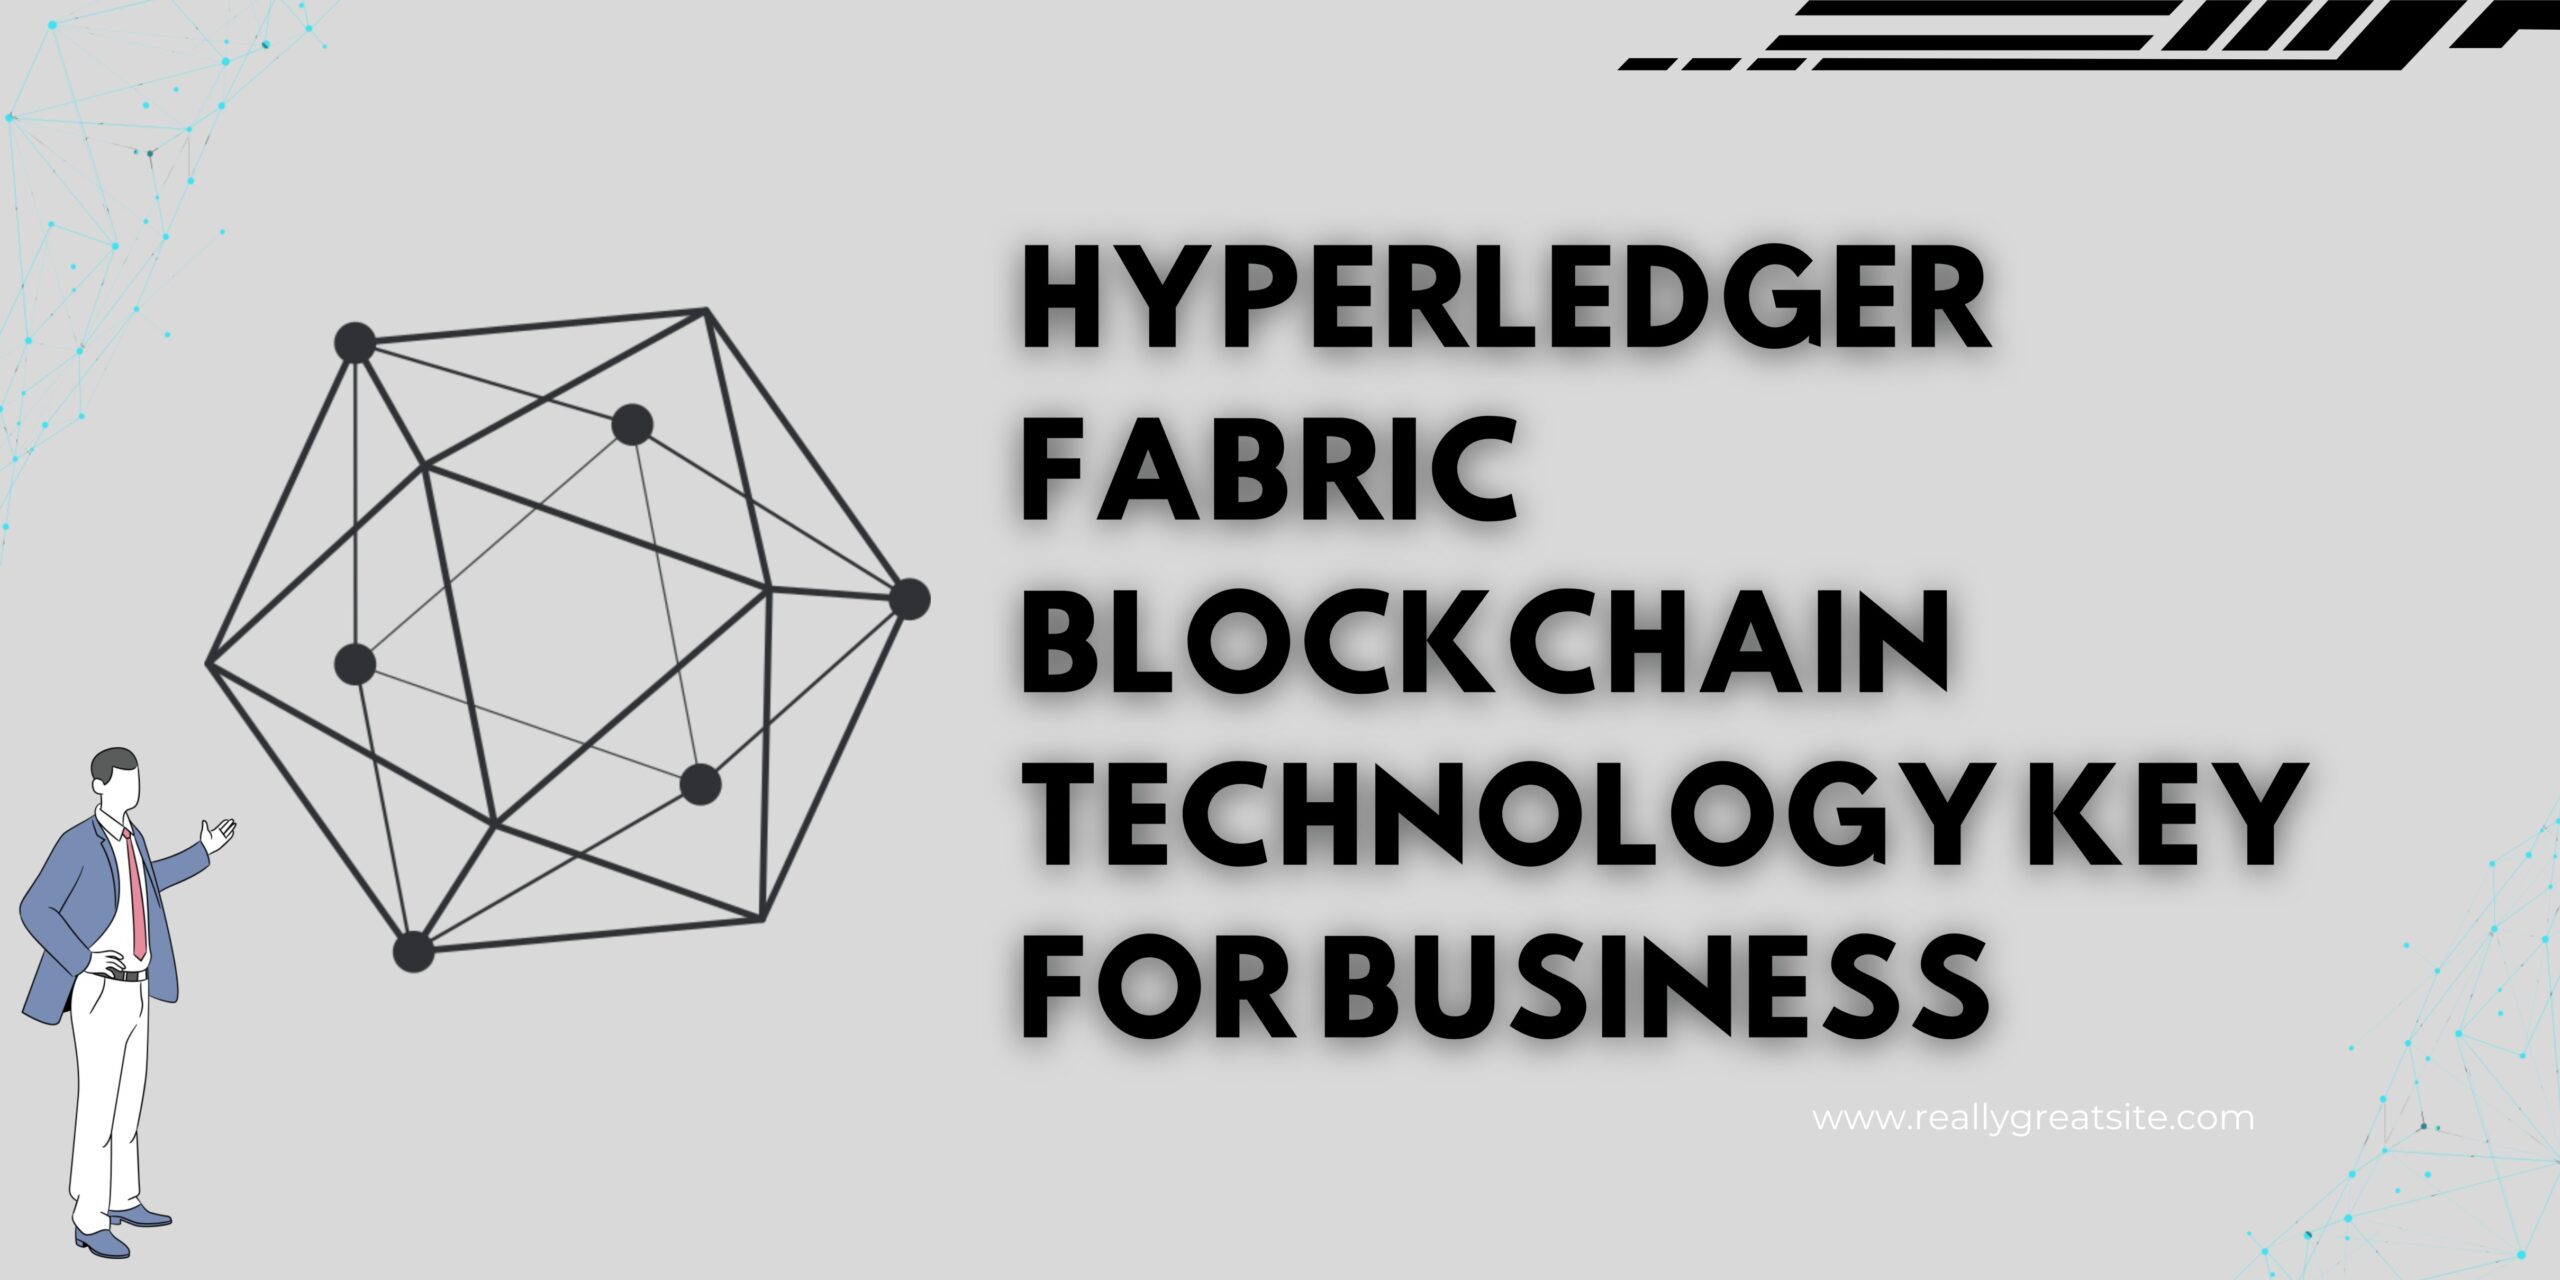 Why Hyperledger Fabric Blockchain Technology Key for Business